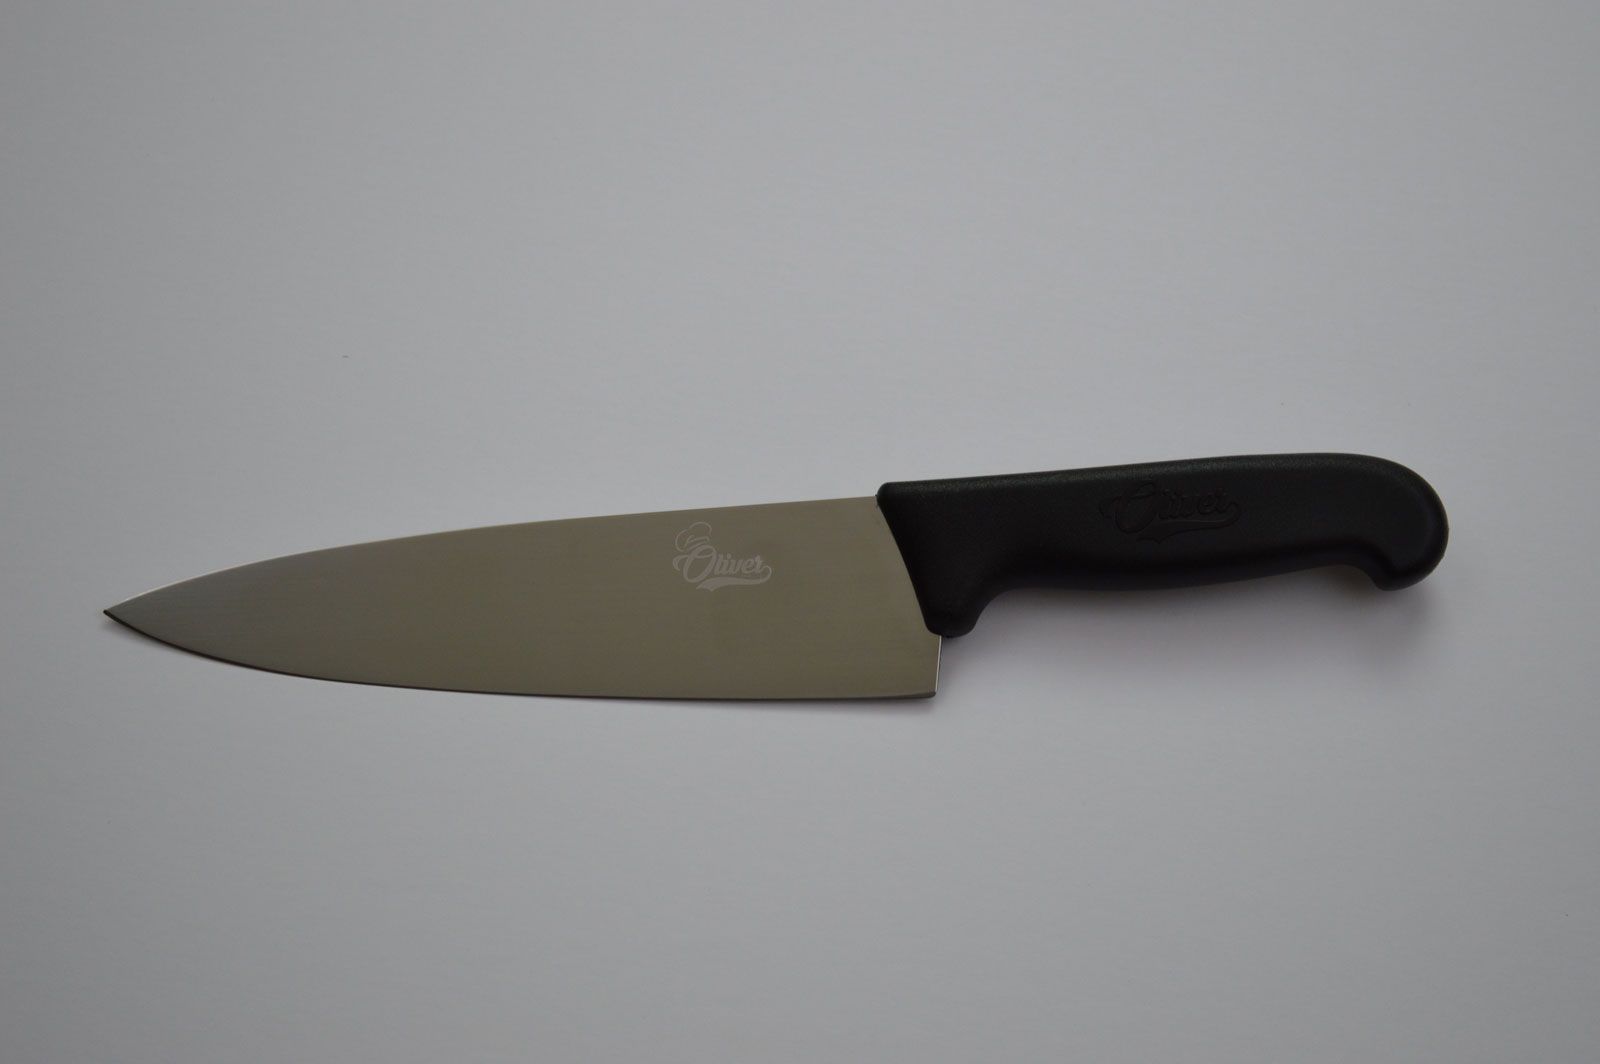 Elite Series】3 Piece Knife Set 8 Chef Knife 8 Serrated Bread Knife –